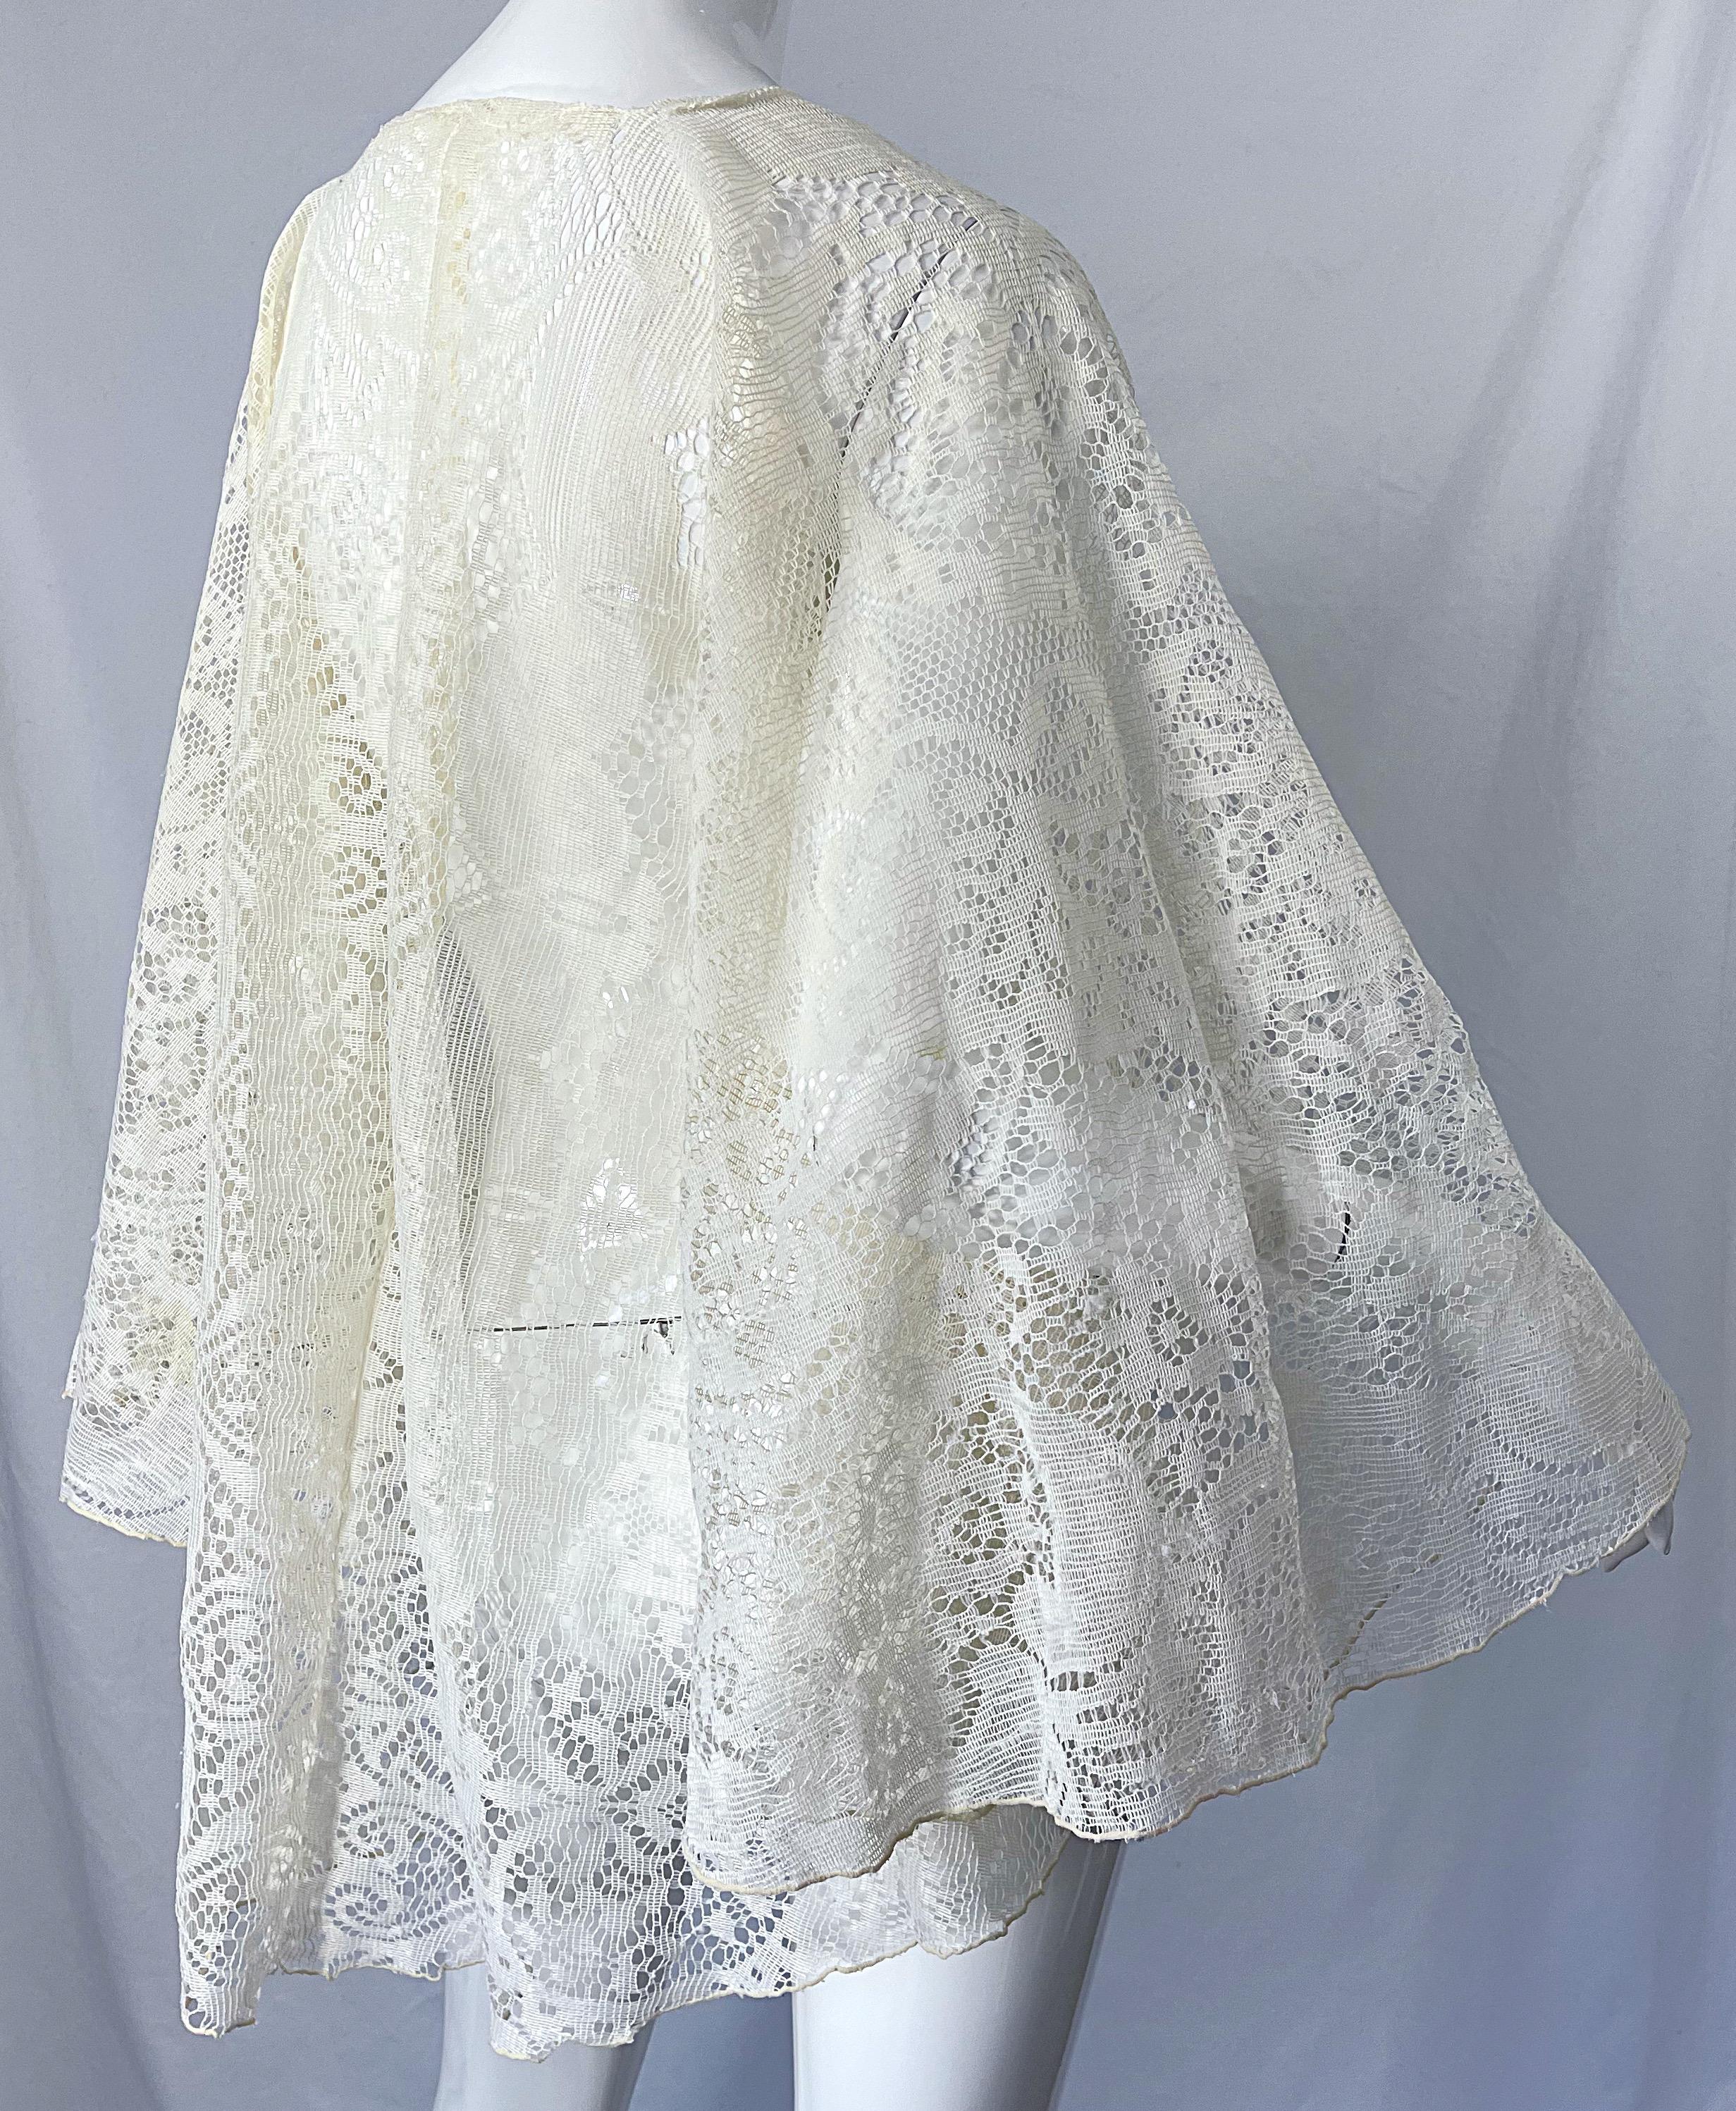 1970s Ivory Lace Bell Sleeve Kimono Poncho Style Vintage 70s Boho Top Shirt 1